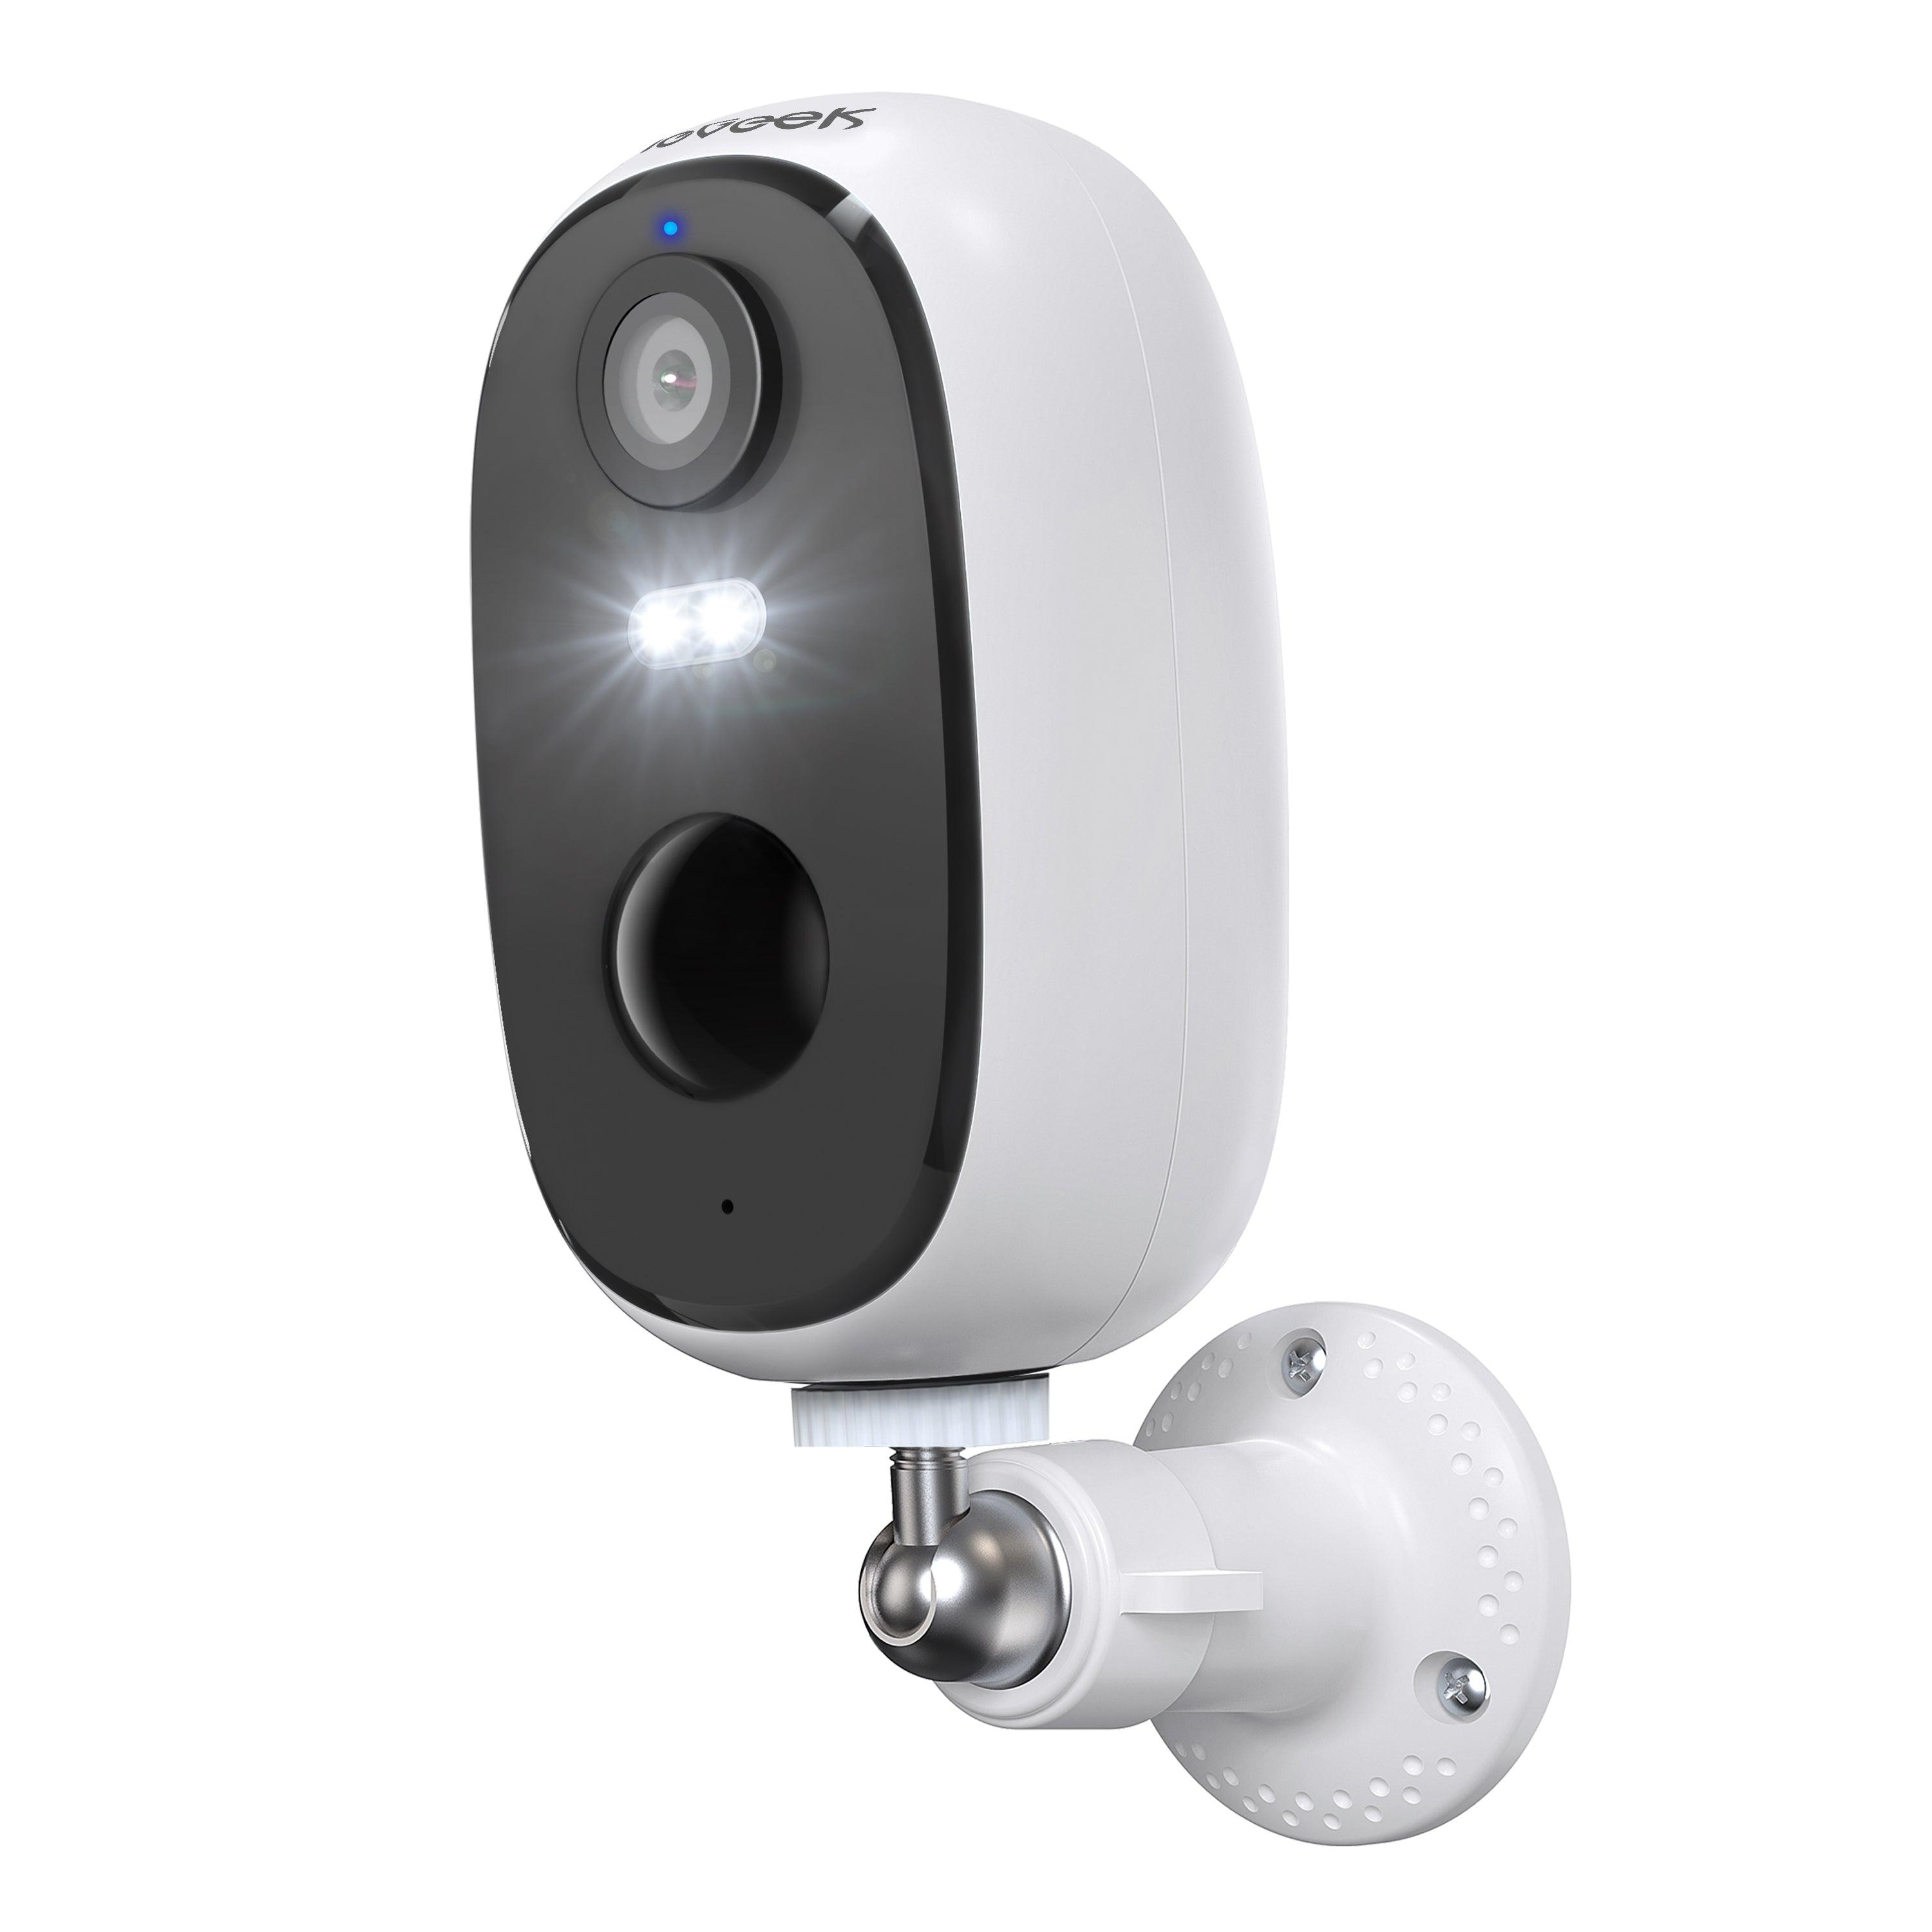 ieGeek Security Camera Wireless WiFi, 360°PTZ 2K/3MP Outdoor Surveillance  Camera, Color Night Vision, Spotlight & Siren, Work with Alexa